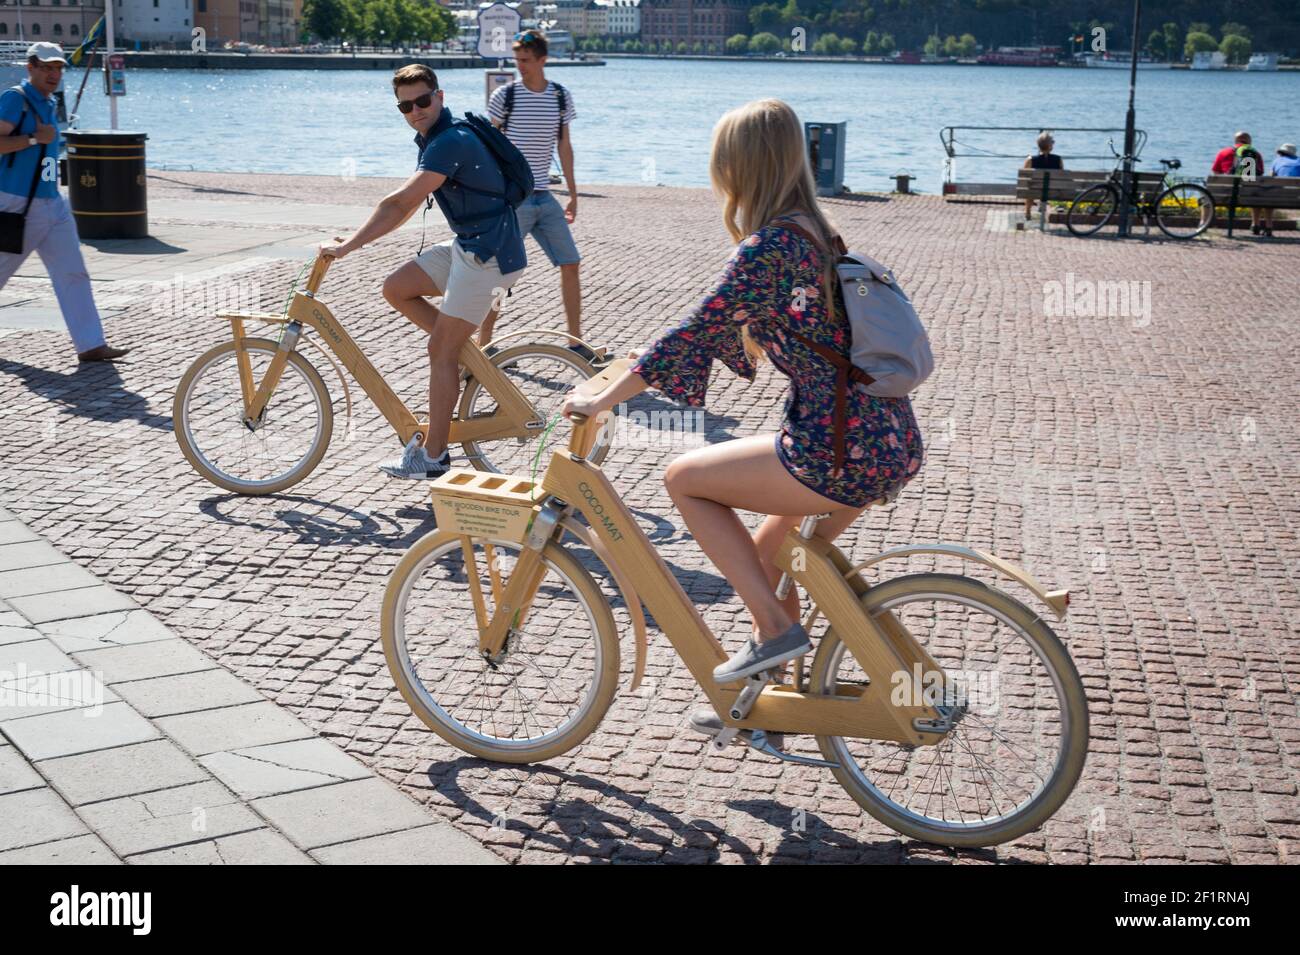 A young couple ride wooden bikes on Stadshuskajen, Stockholm, Sweden. Stock Photo